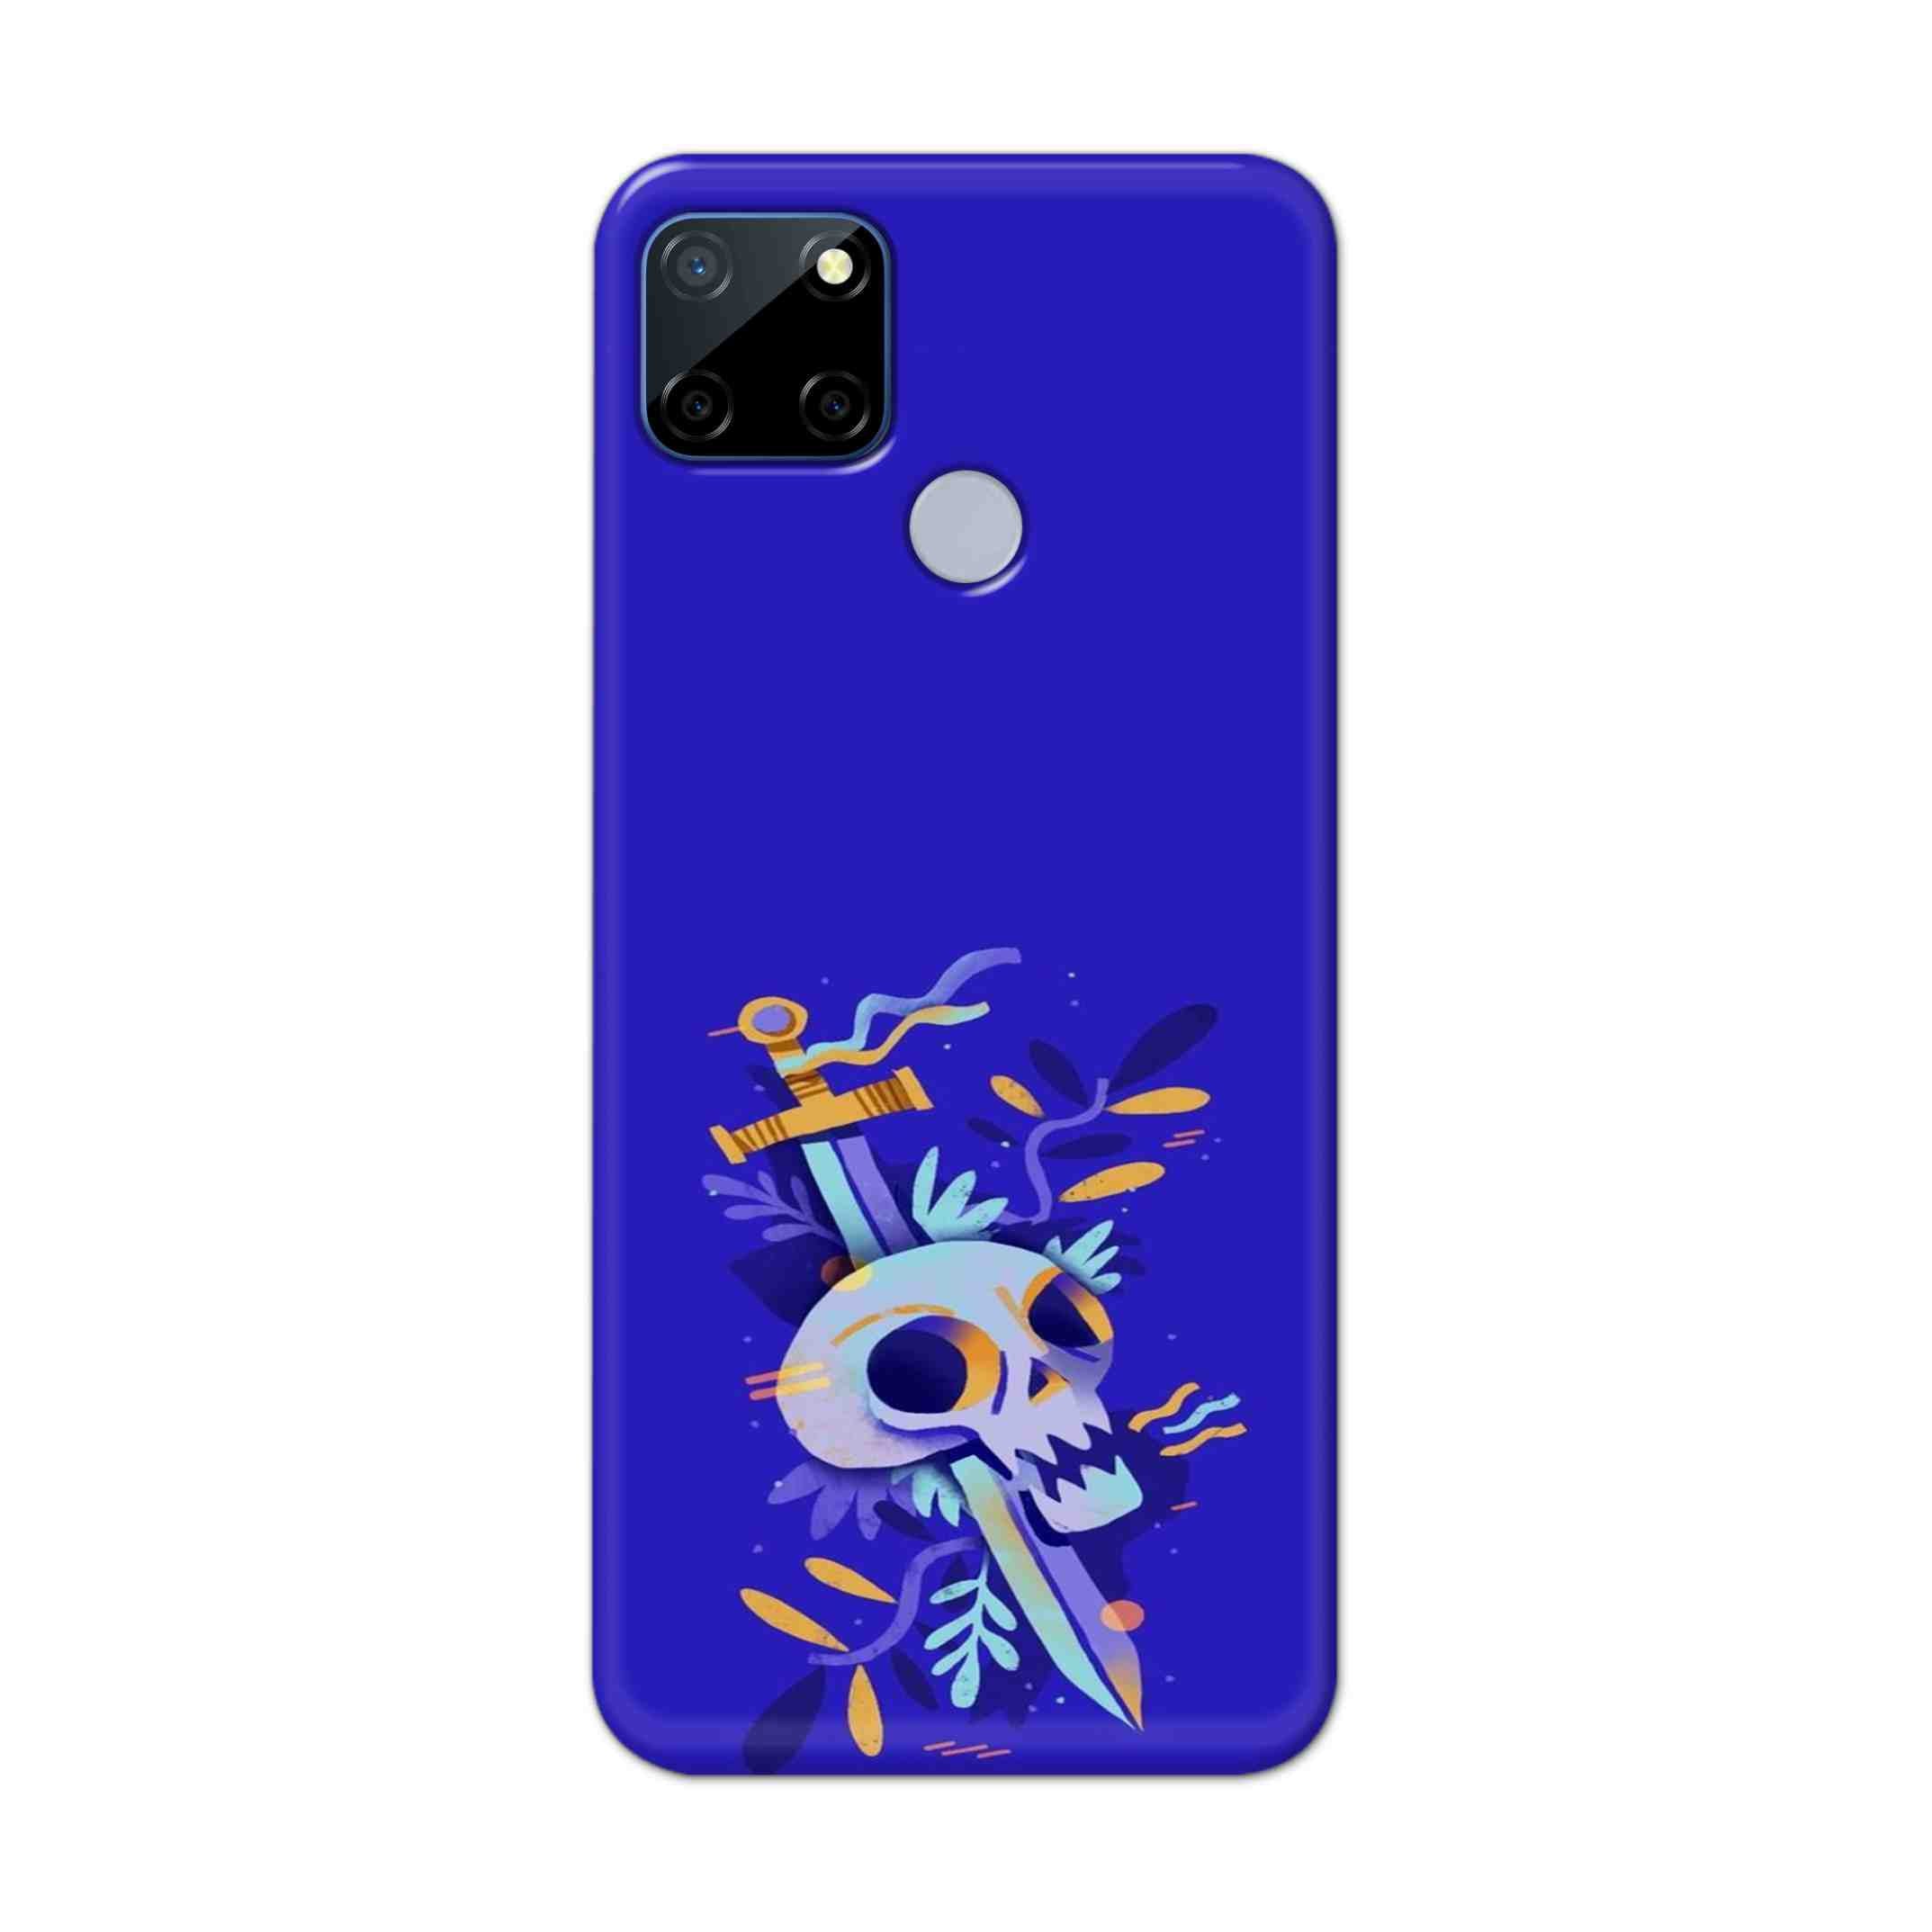 Buy Blue Skull Hard Back Mobile Phone Case Cover For Realme C12 Online